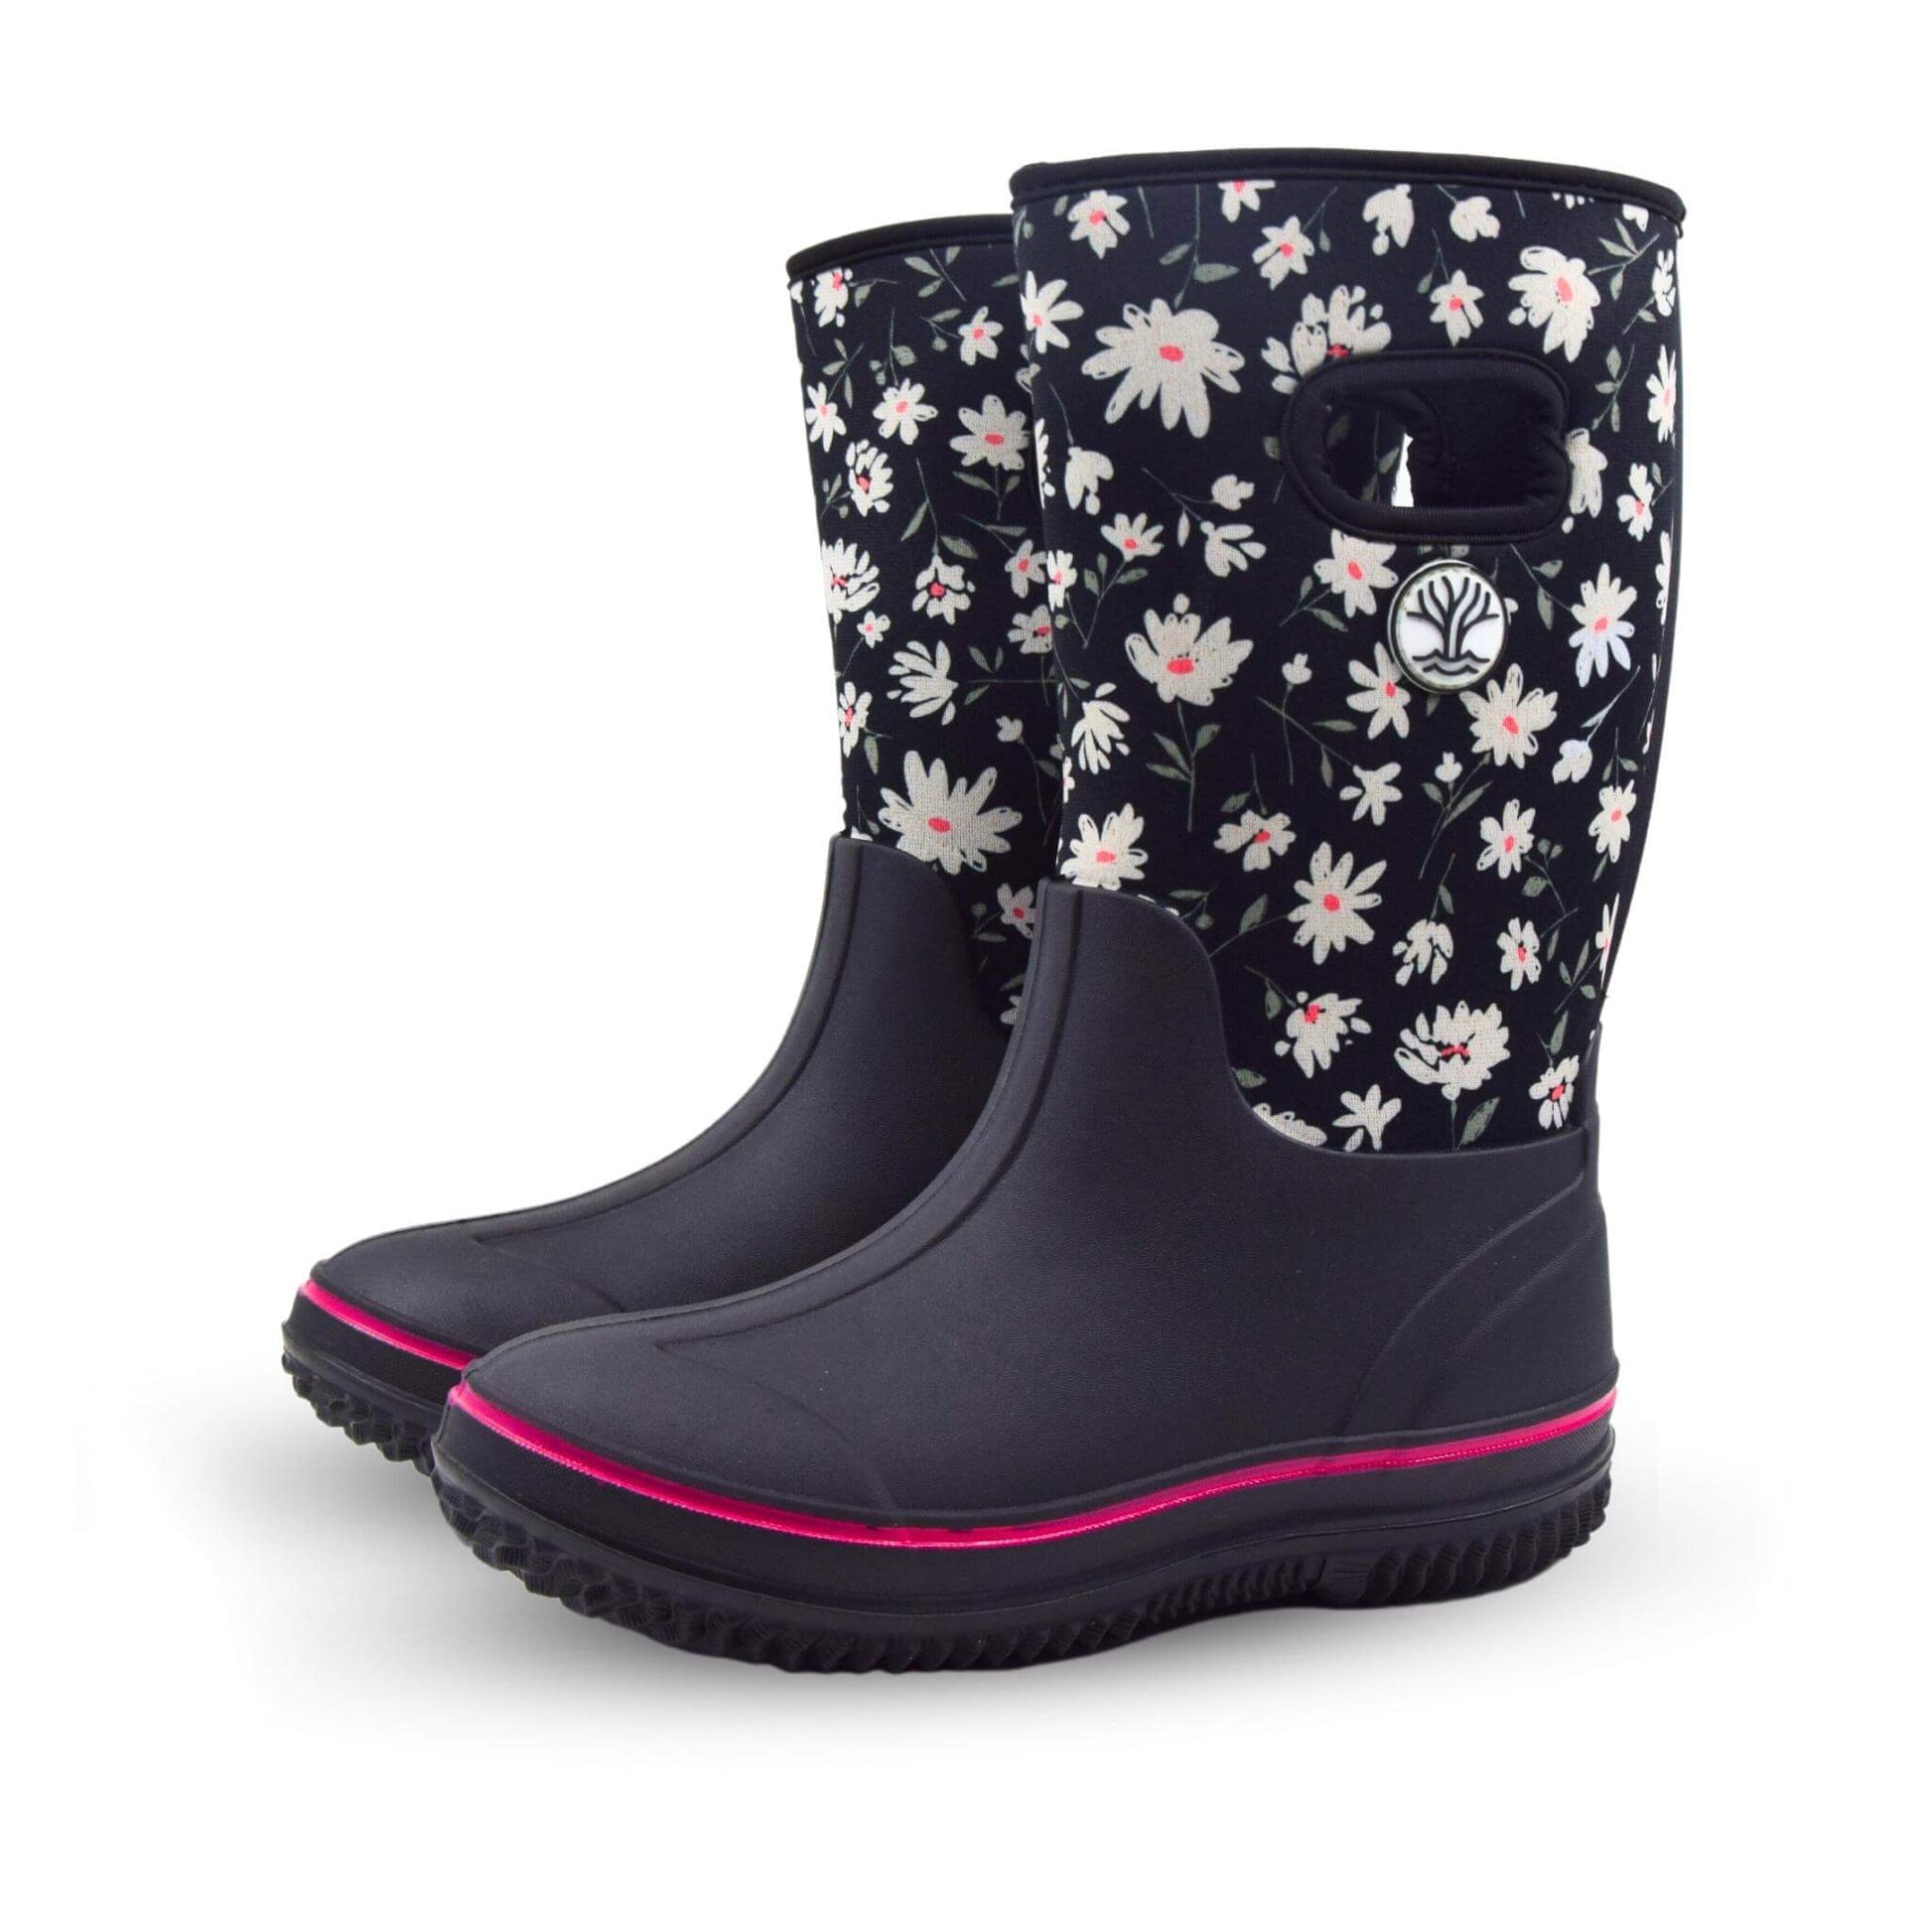 Wavetree Gumboot made of neoprene with daisy design. Pair of waterproof rain boots.